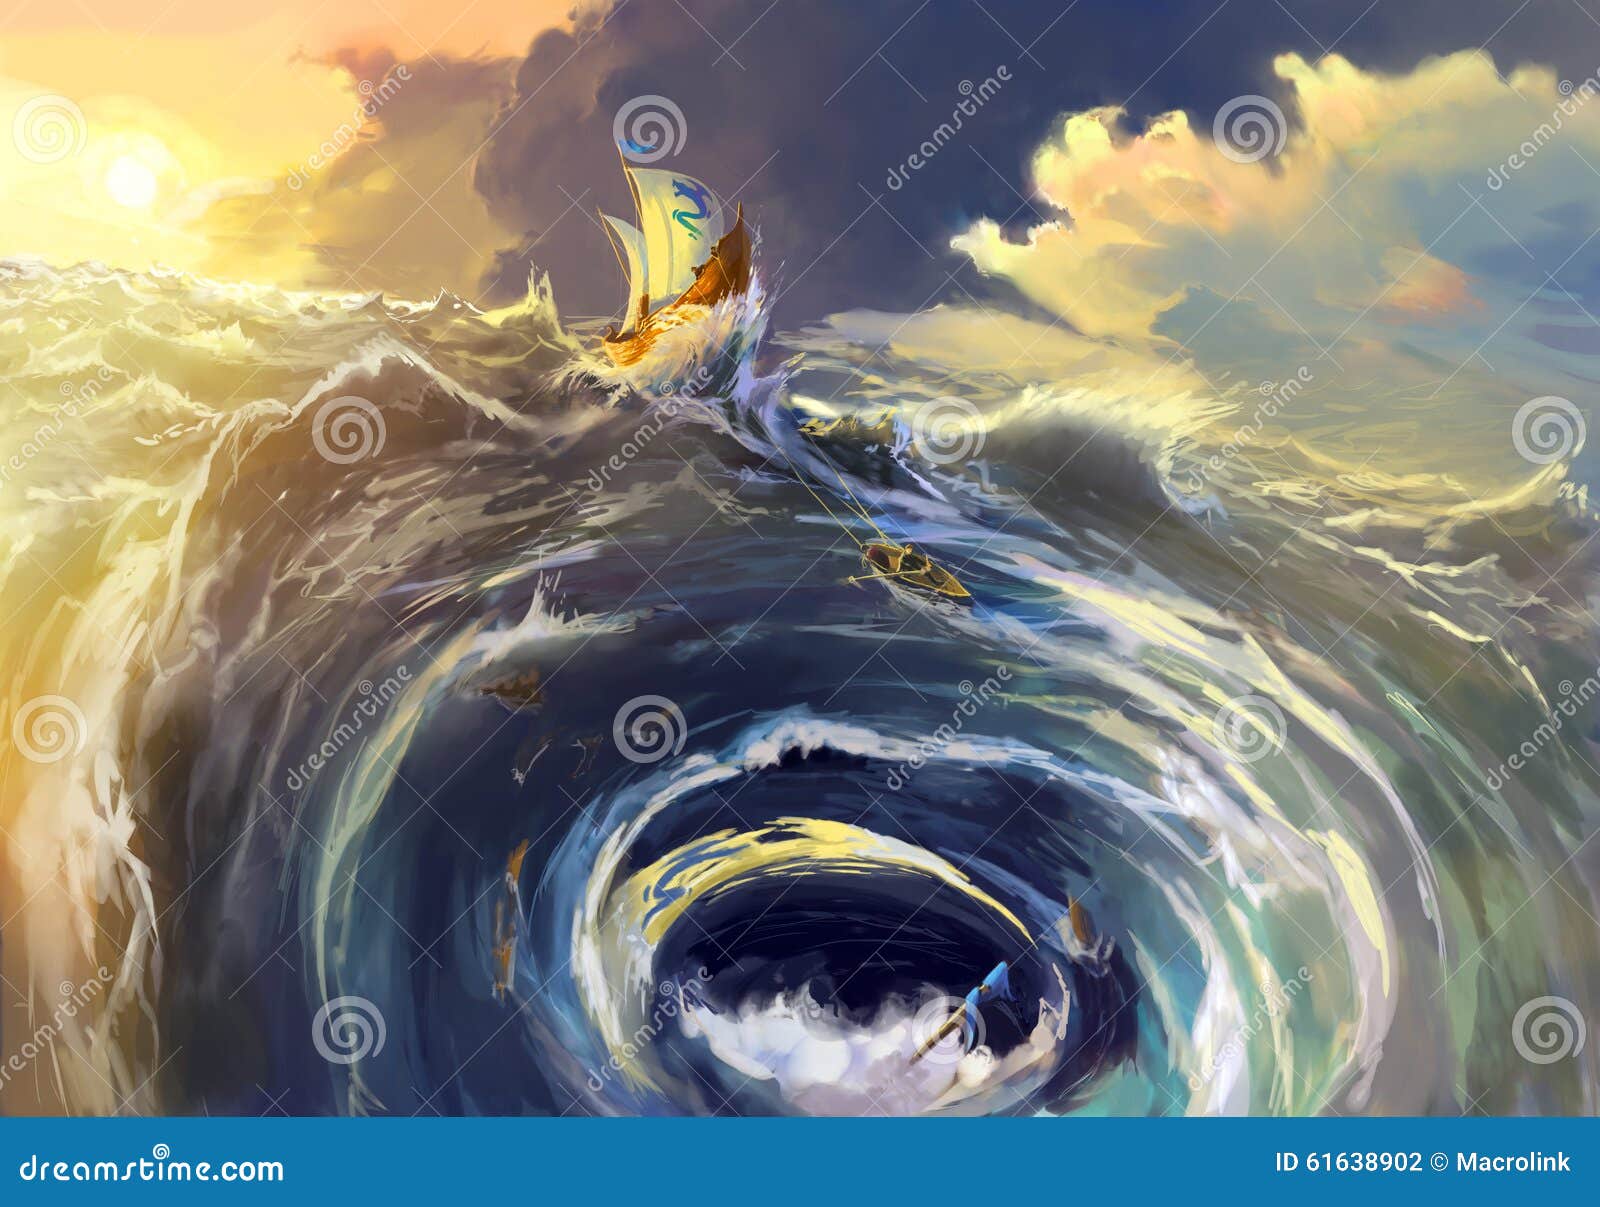 https://thumbs.dreamstime.com/z/rescue-whirlpool-ship-was-maelstrom-nautical-scenic-landscape-illustration-maelstrom-61638902.jpg